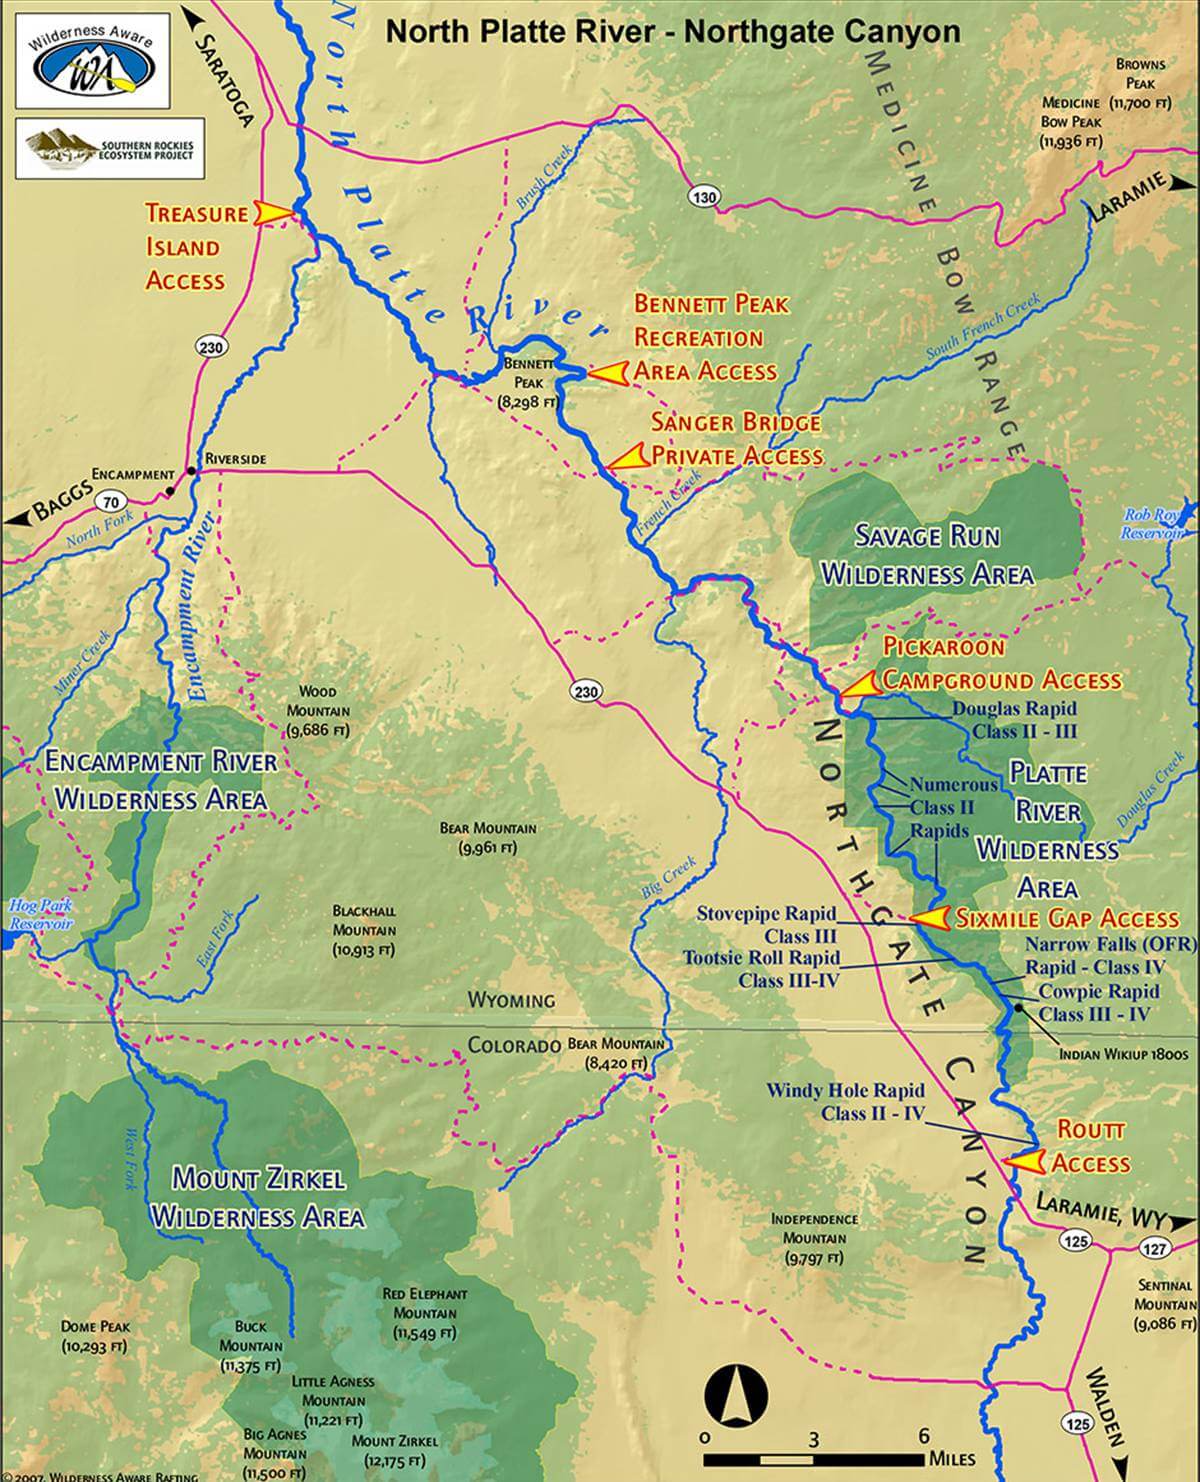 North Platte River Map Northgate Canyon Inaraft Com